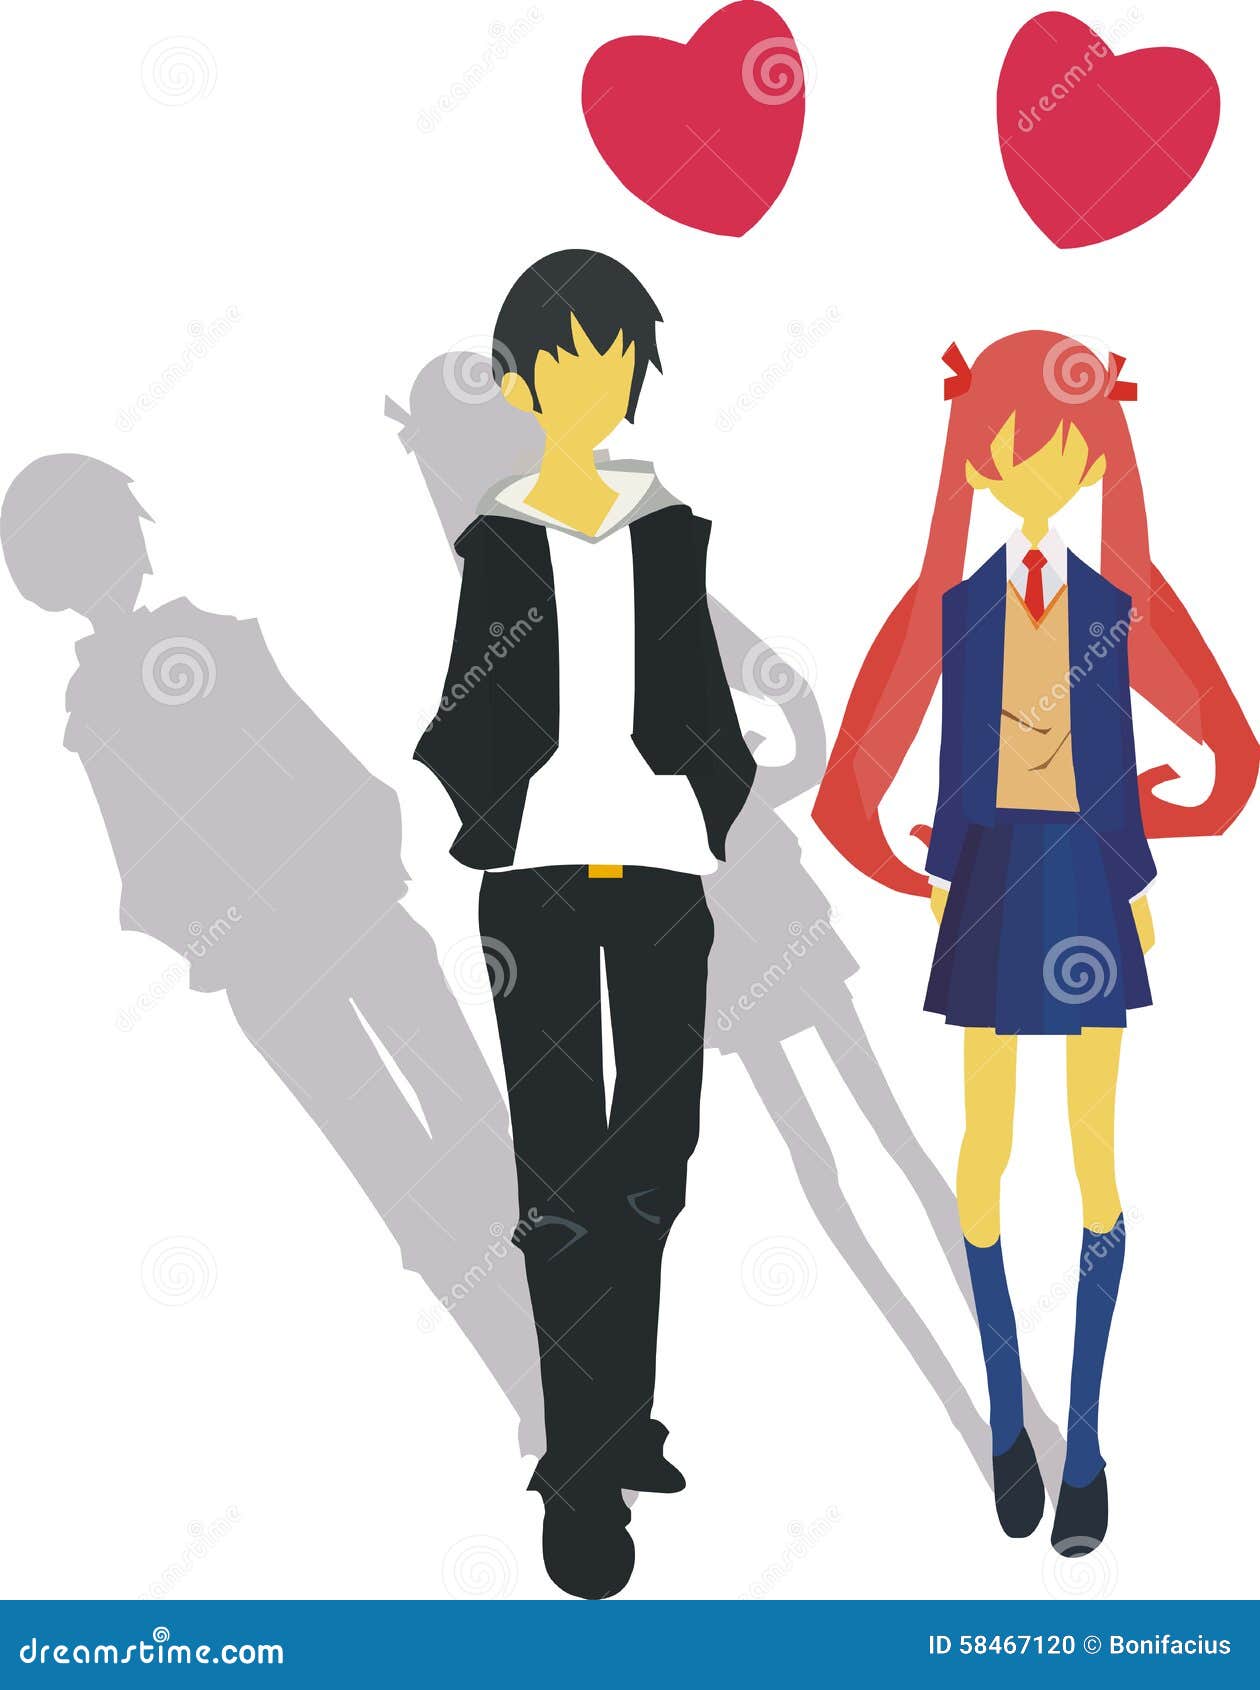 Love Story cartoon stock vector. Illustration of anime - 58467120